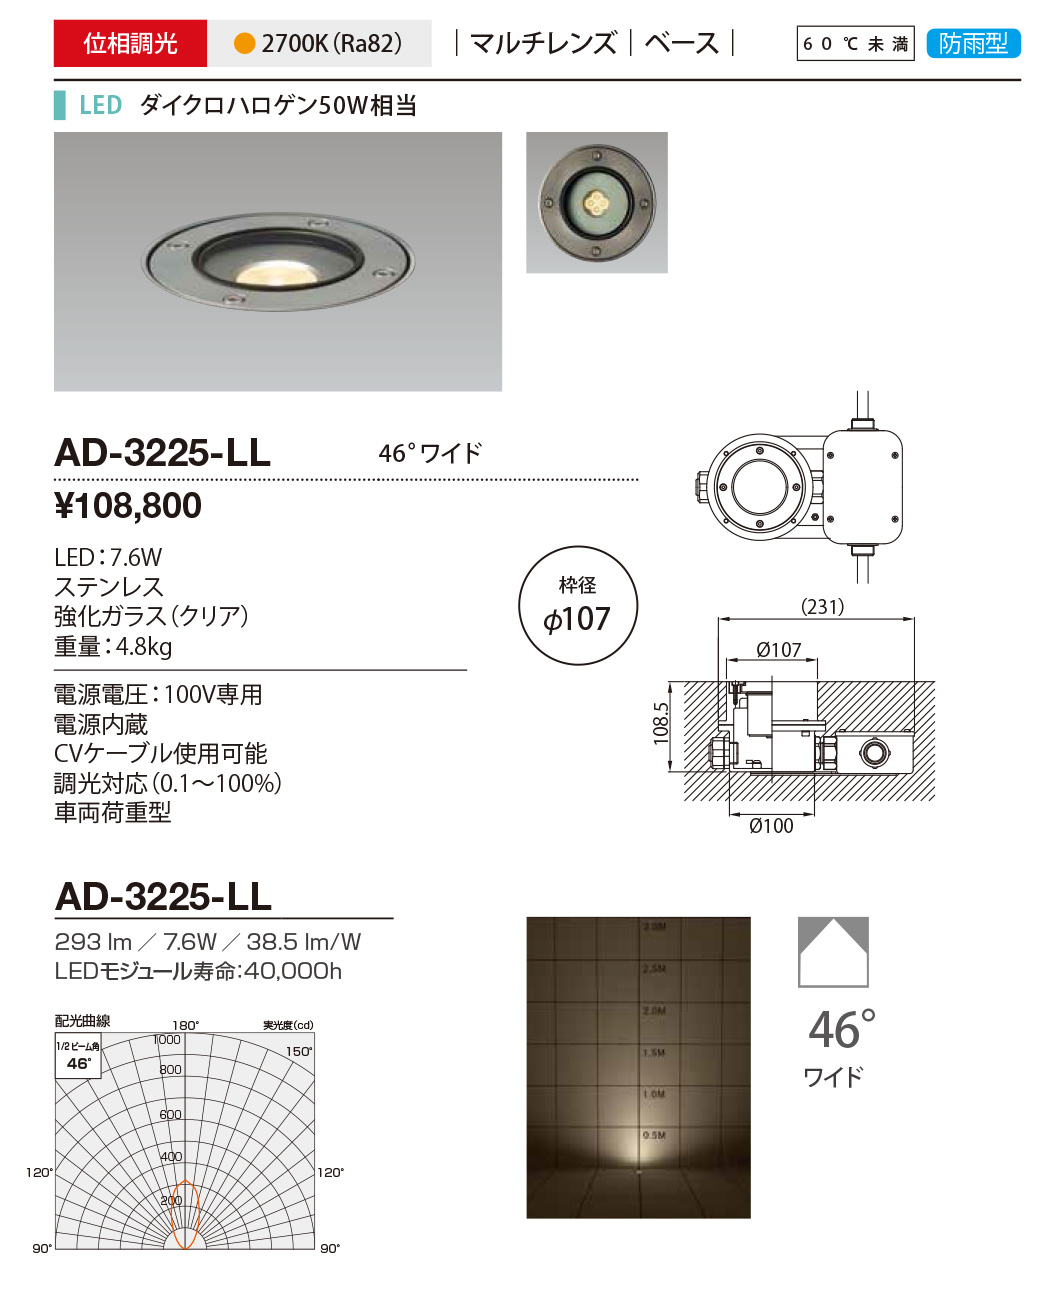 AD-3225-LL(山田照明) 商品詳細 ～ 照明器具・換気扇他、電設資材販売のブライト